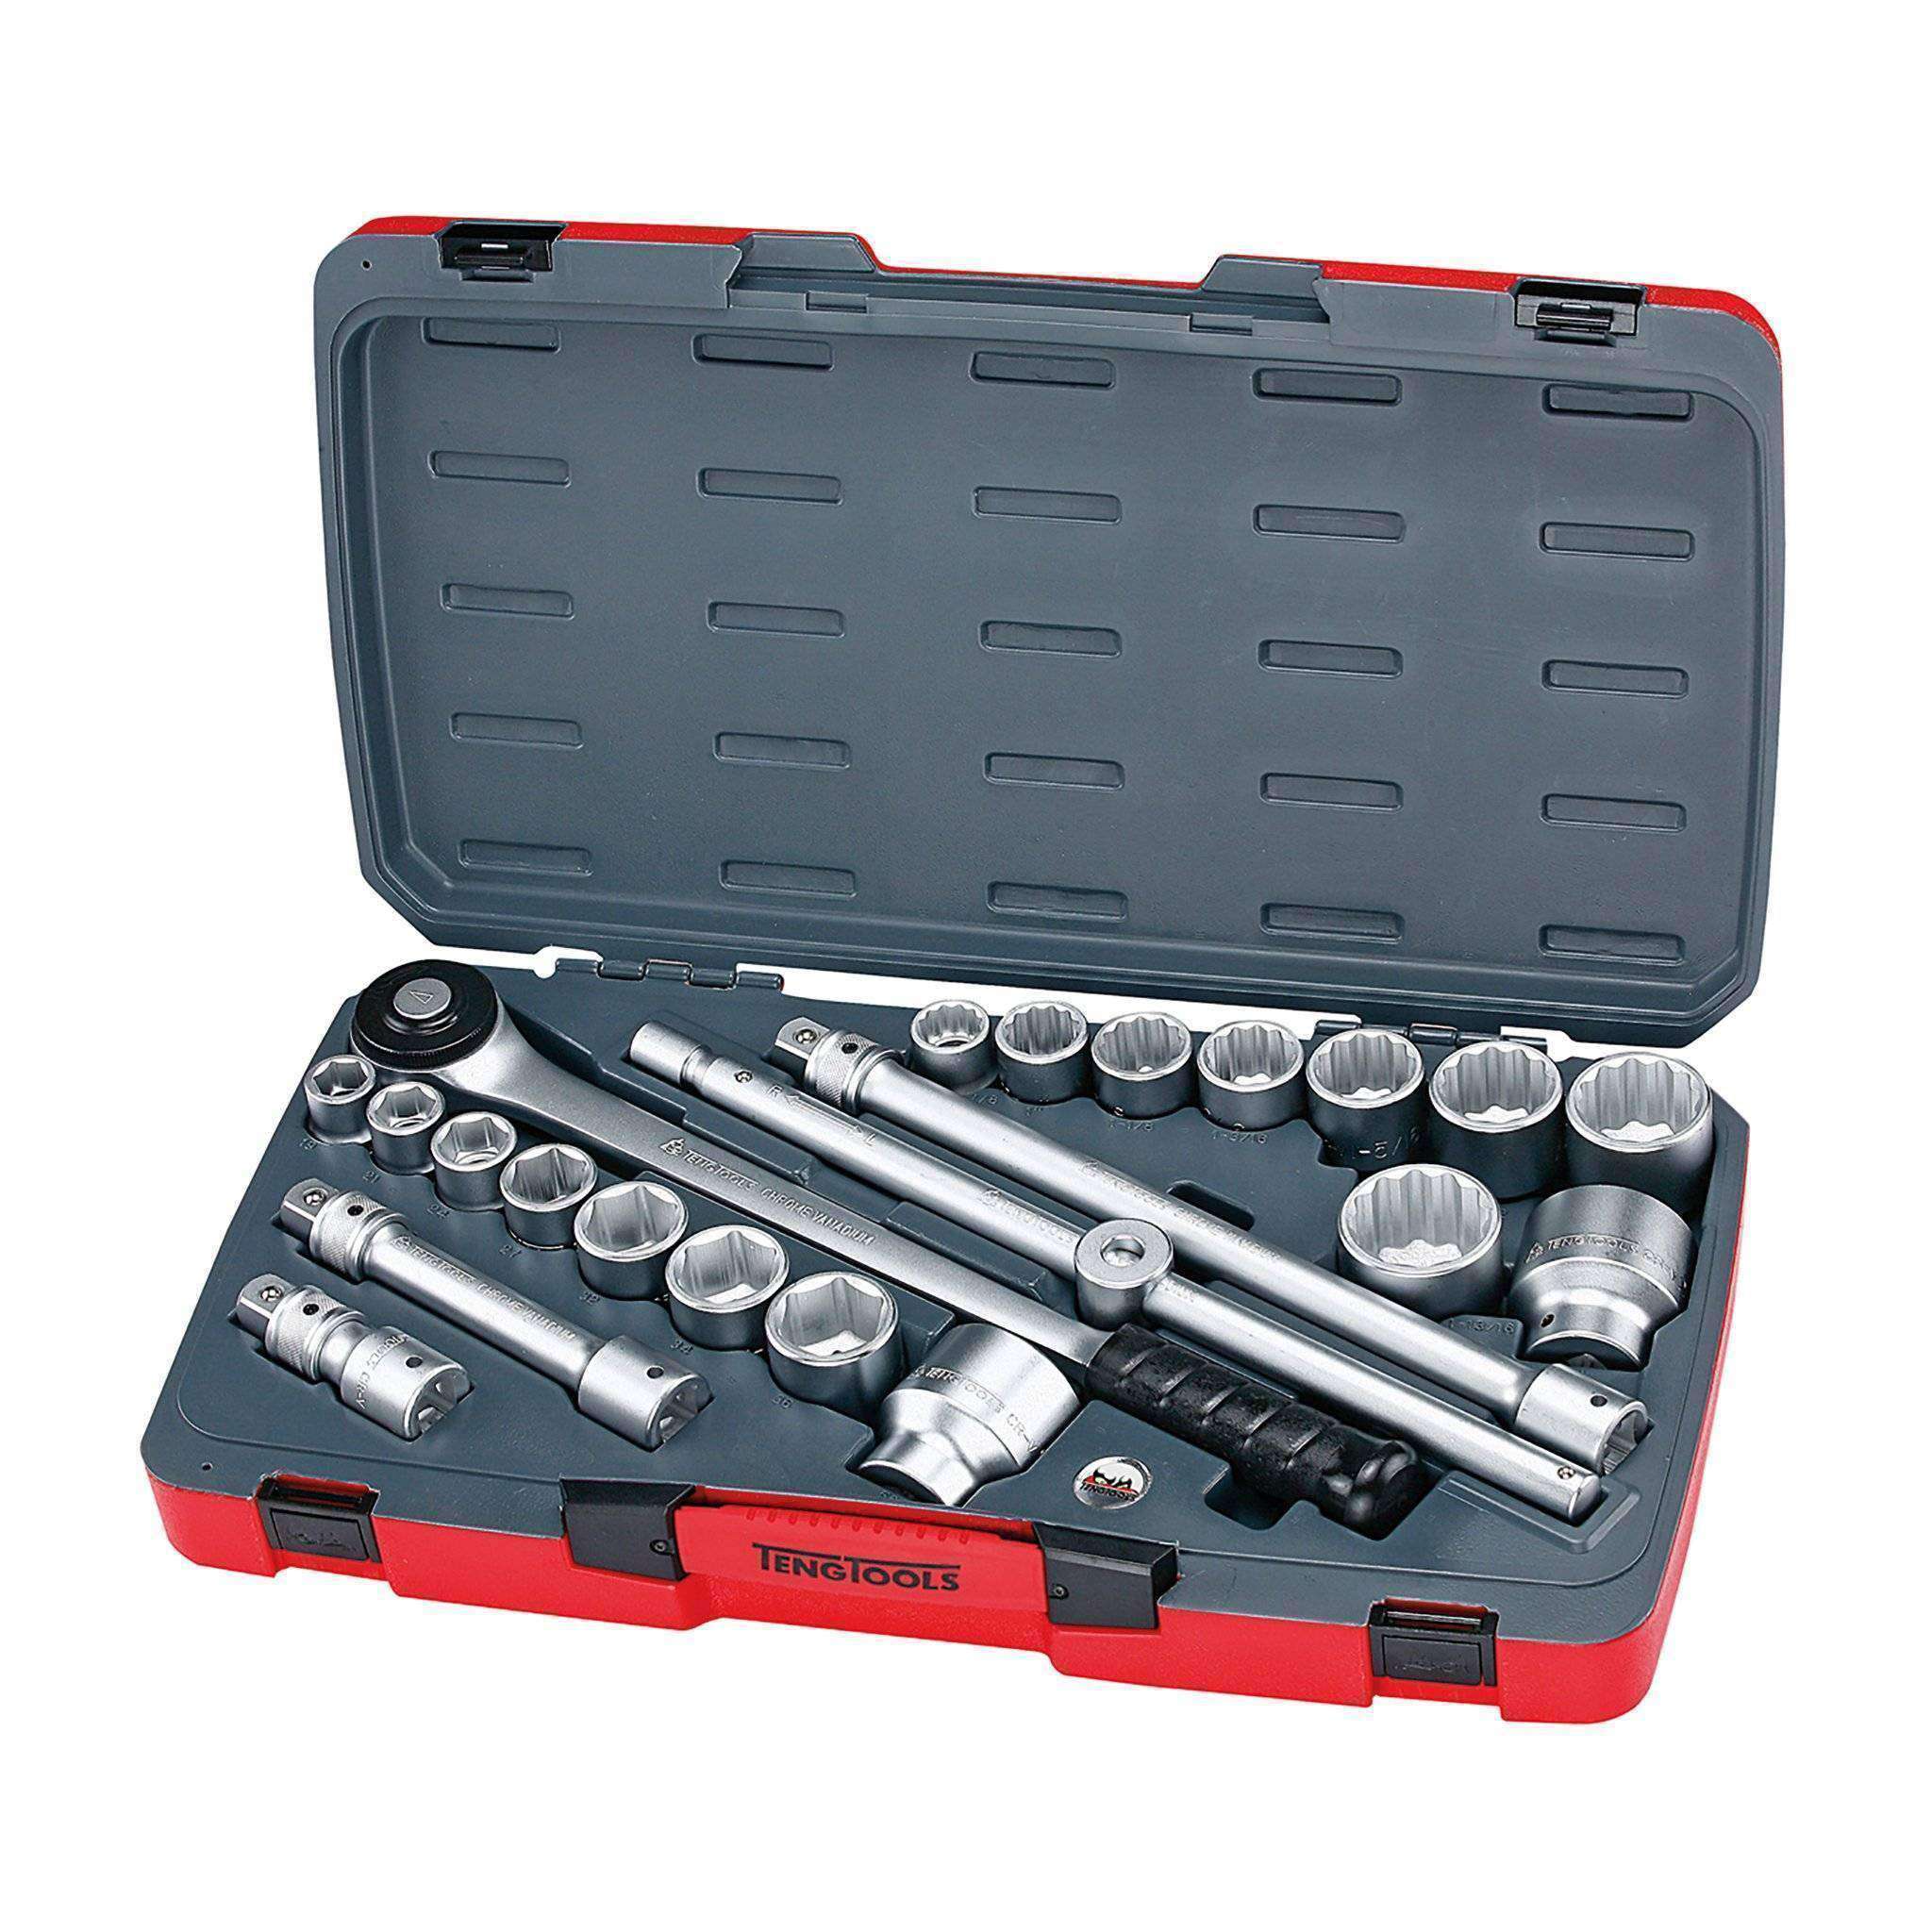 Teng Tools 22 Piece 3/4 Inch Drive 6 & 12 Point Metric & SAE Regular/Shallow Socket Set - T3422S